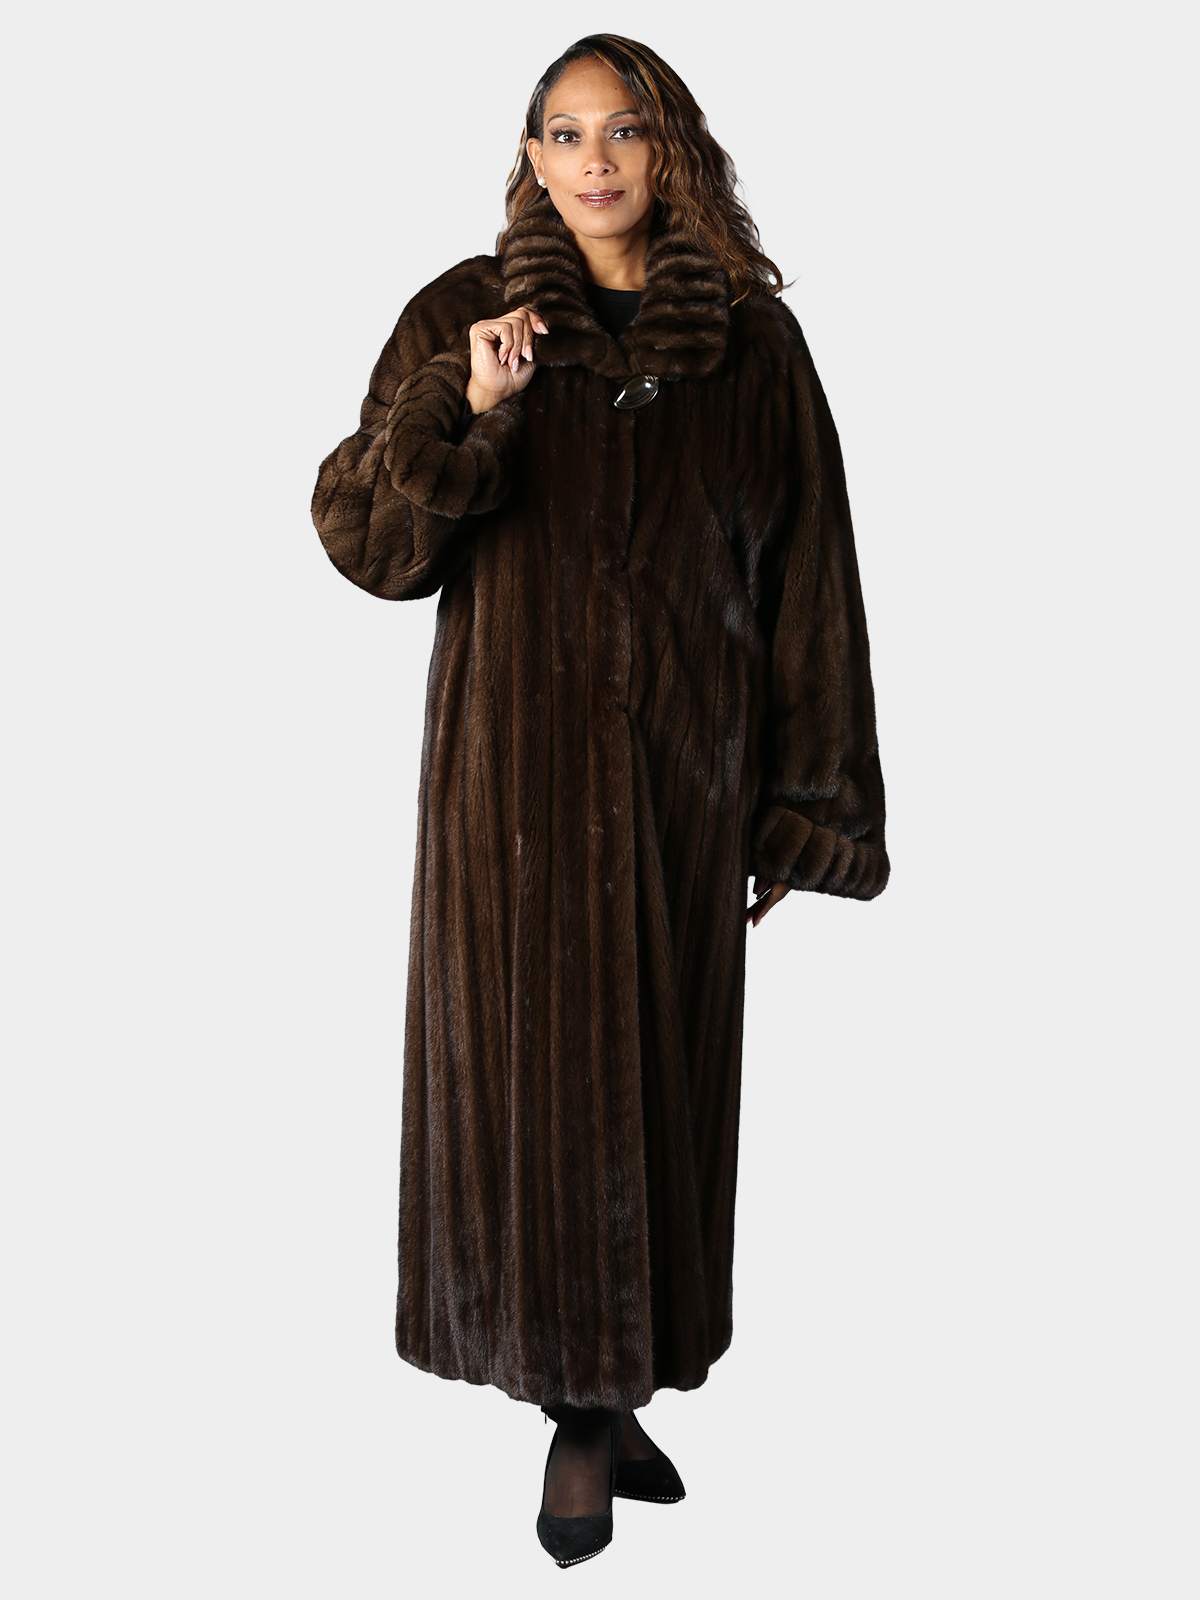 Scaasis Woman's Mahogany Female Mink Fur Coat - Estate Furs